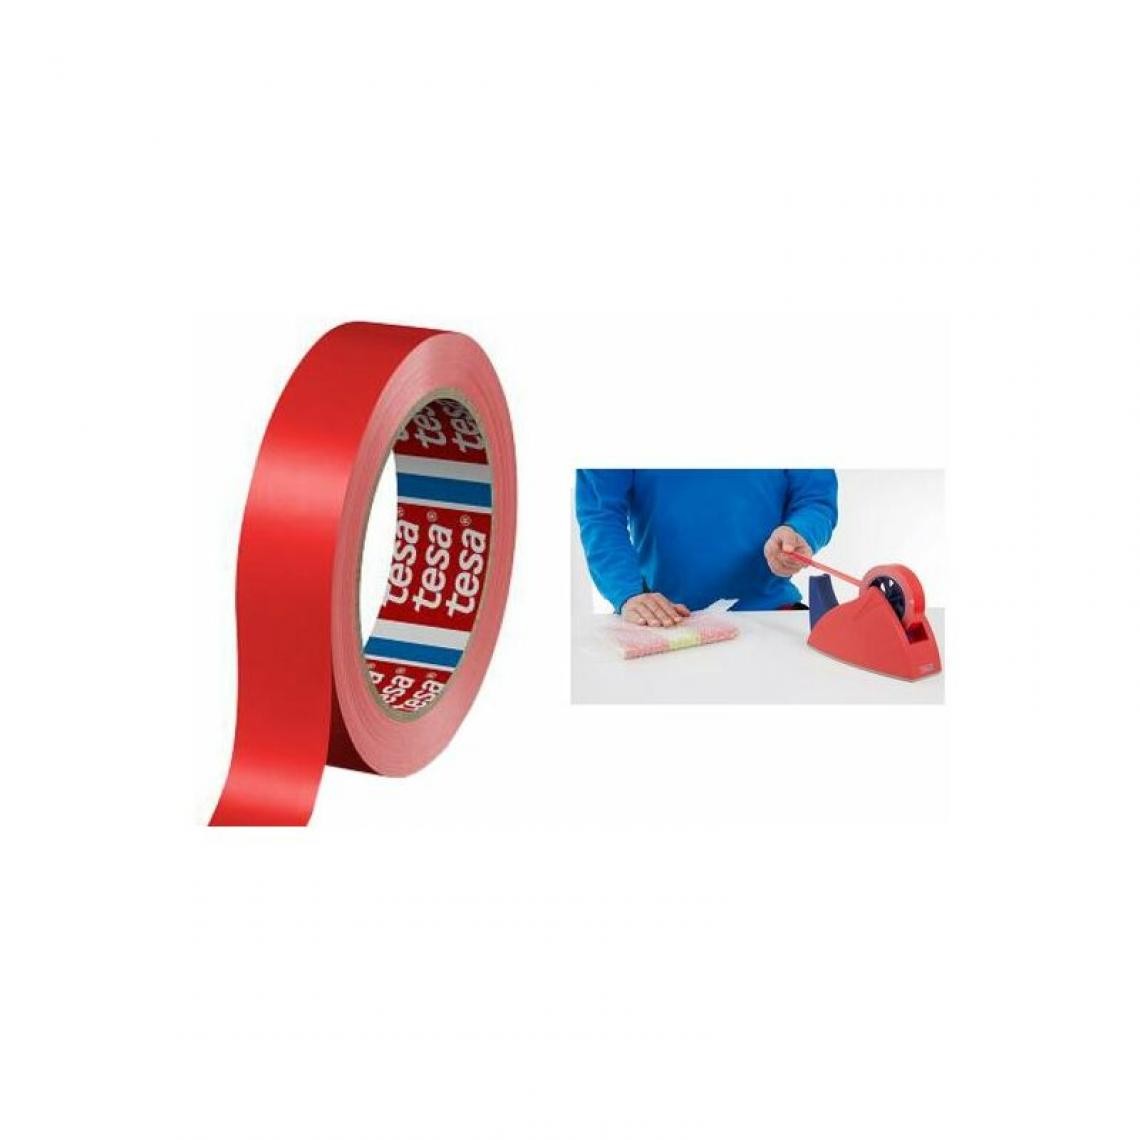 Tesa - tesa Ruban adhésif d'emballage 60404, 9 mm x 66 m, rouge () - Adhésif d'emballage